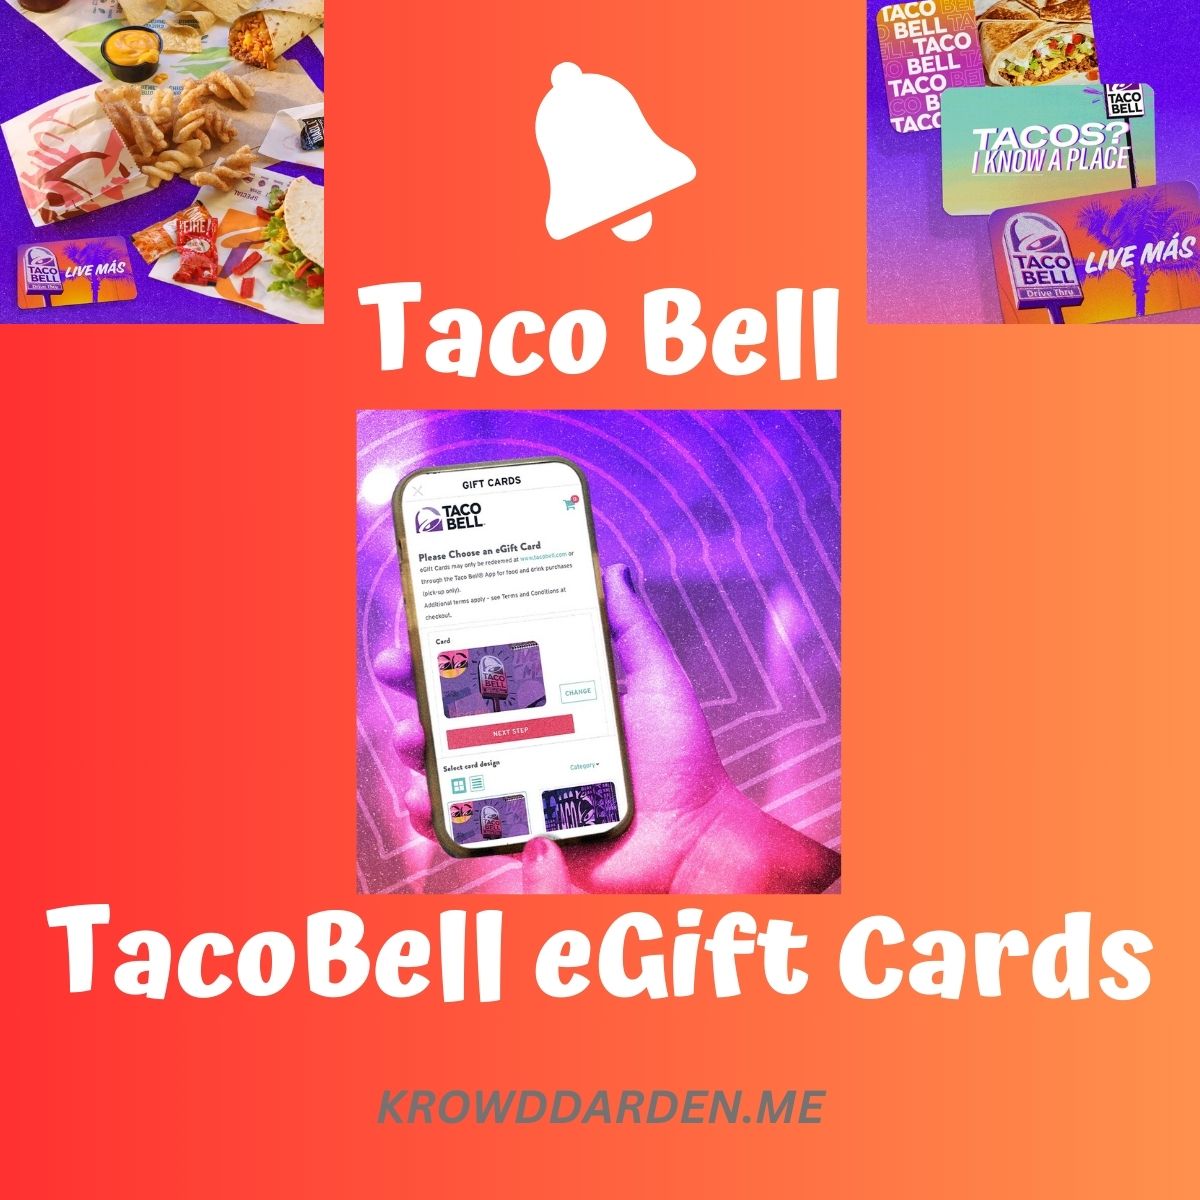 Taco Bell Menu Calories | Taco Bell Fresco Menu | Taco Bell Jobs | Taco Bell Jobs application | Taco Bell Offer | Taco Bell Menu